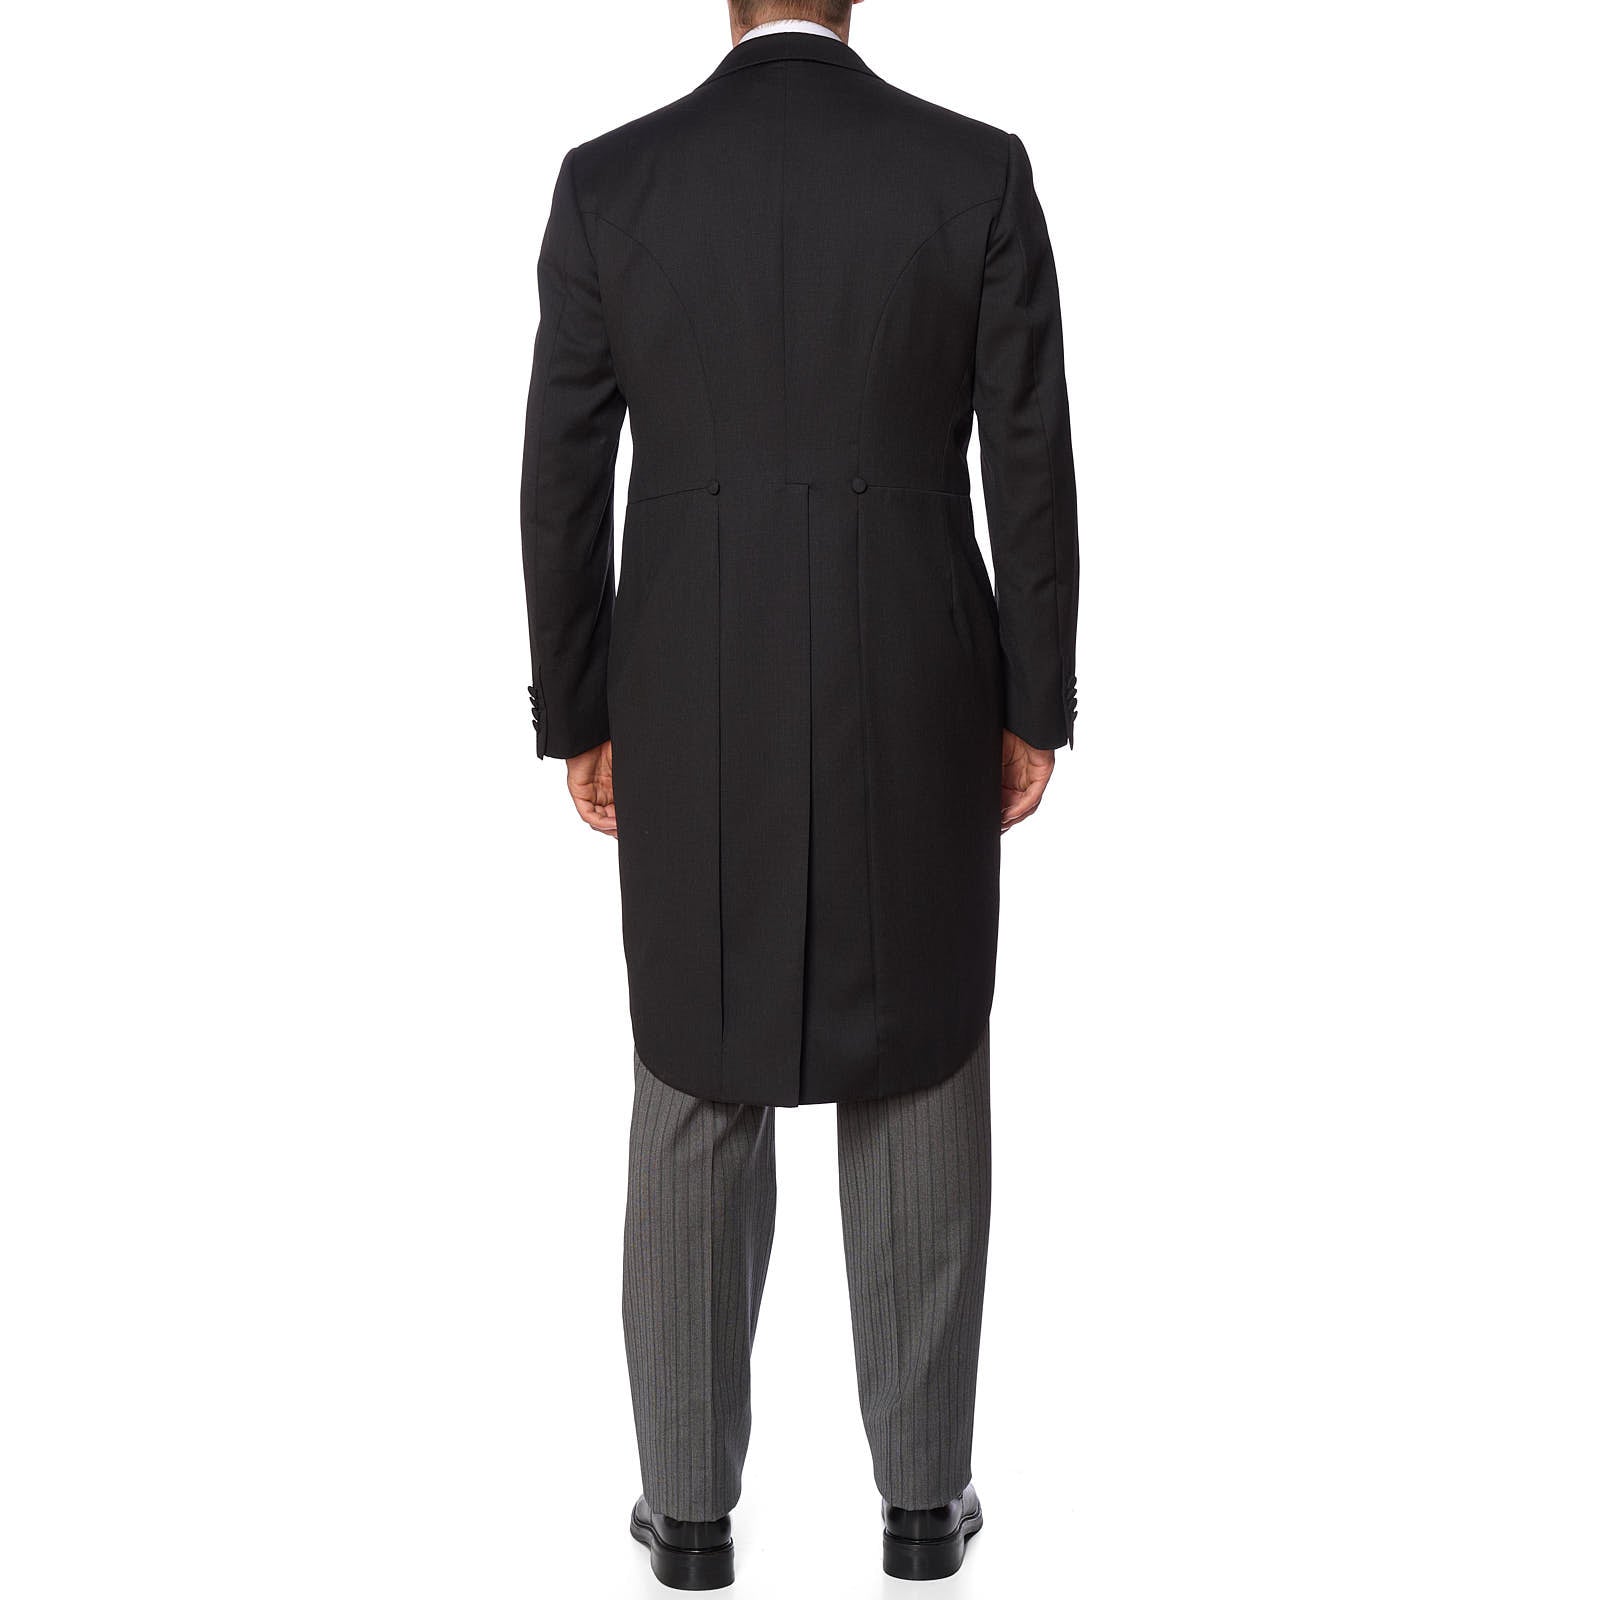 VANNUCCI Handmade Super 110's 3 Piece Morning Coat Suit Wedding EU 52 NEW US 42